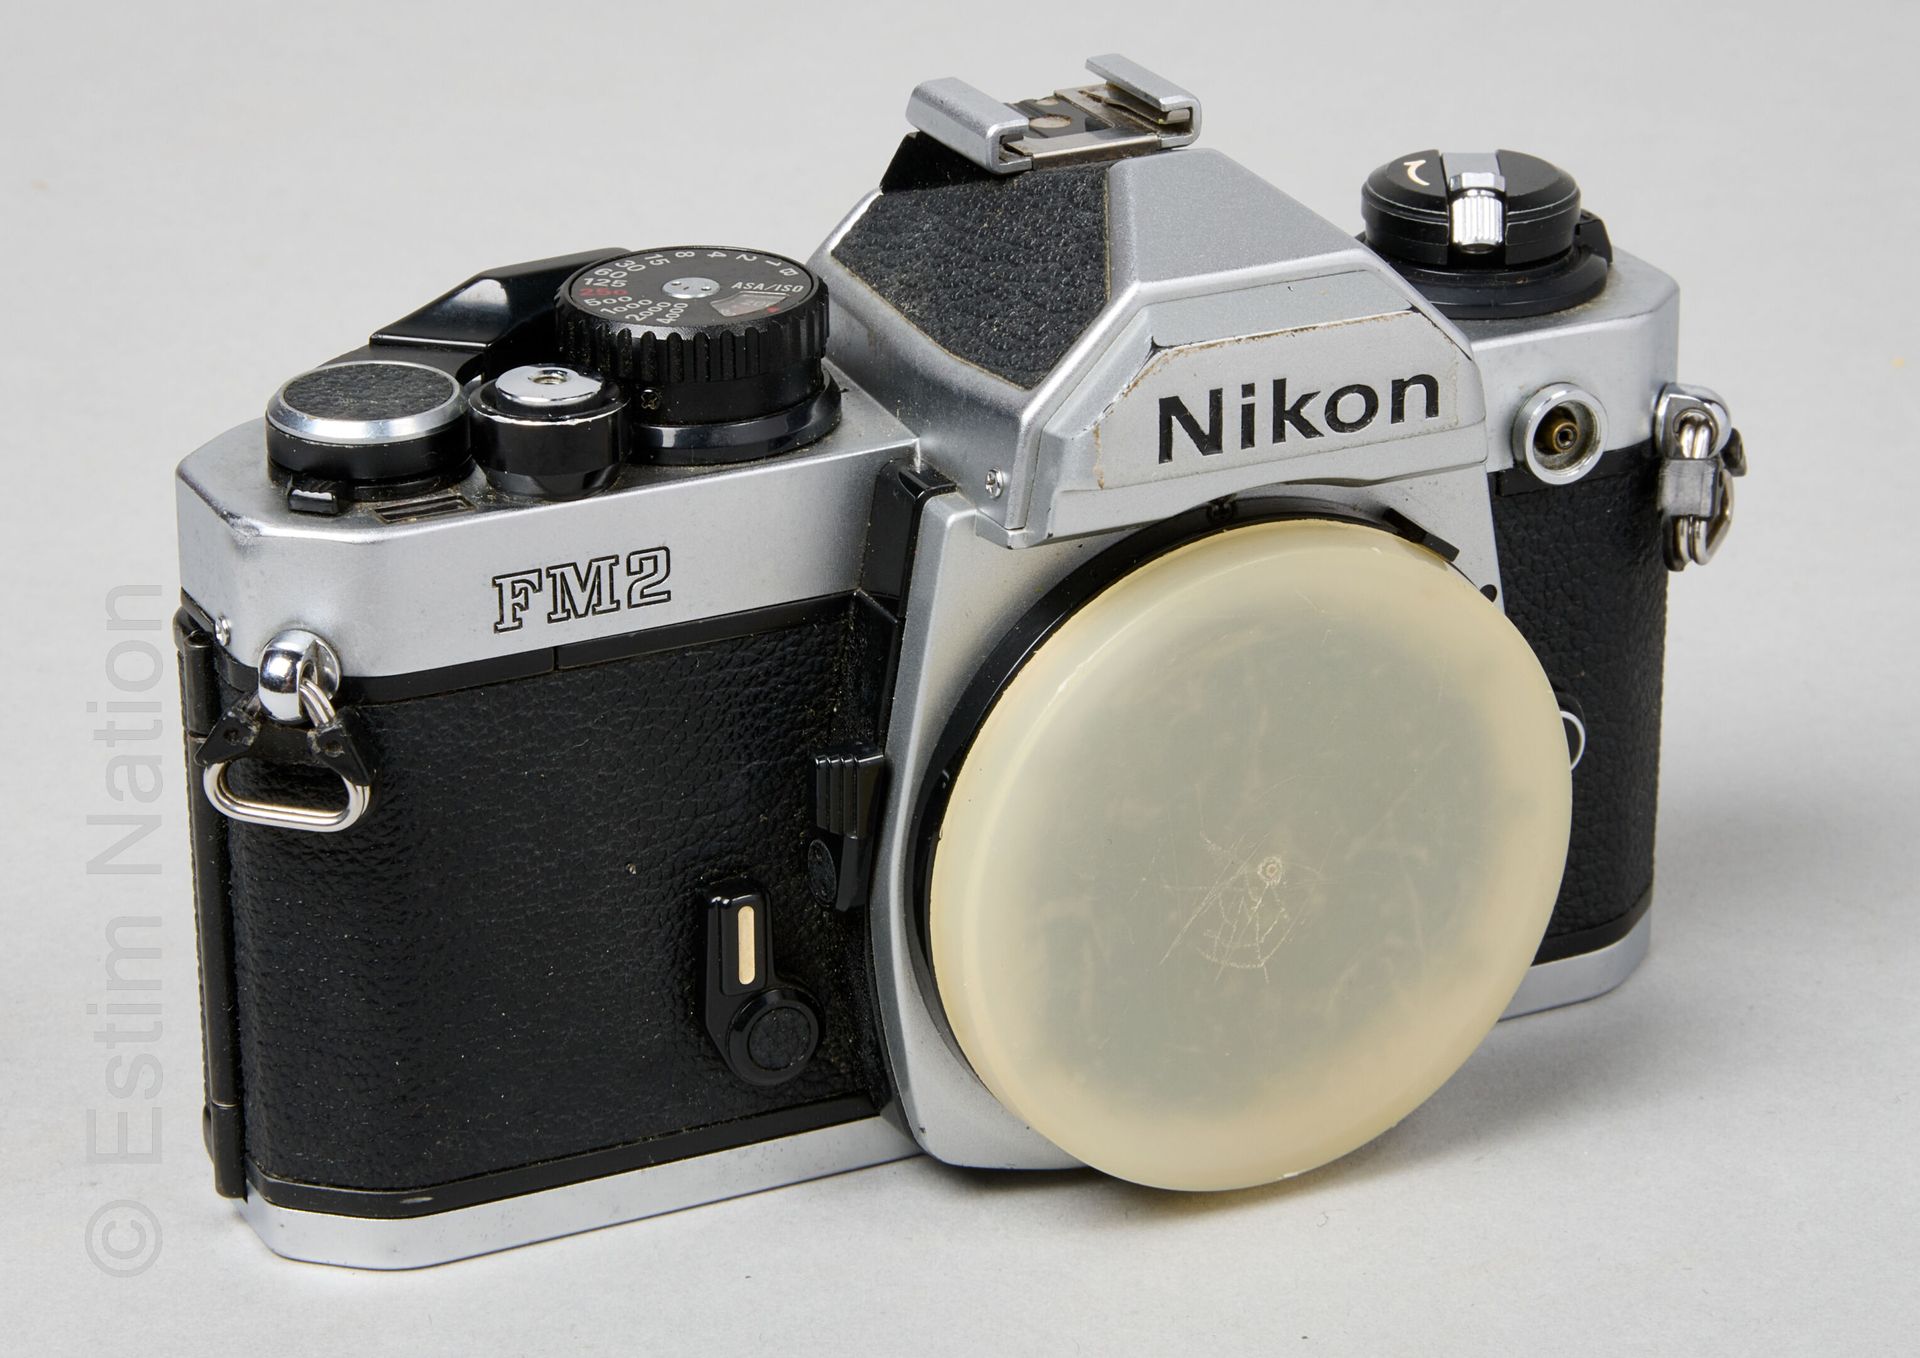 APPAREILS PHOTOGRAPHIQUES NIKON

Metal and leatherette camera body, model FM2, s&hellip;